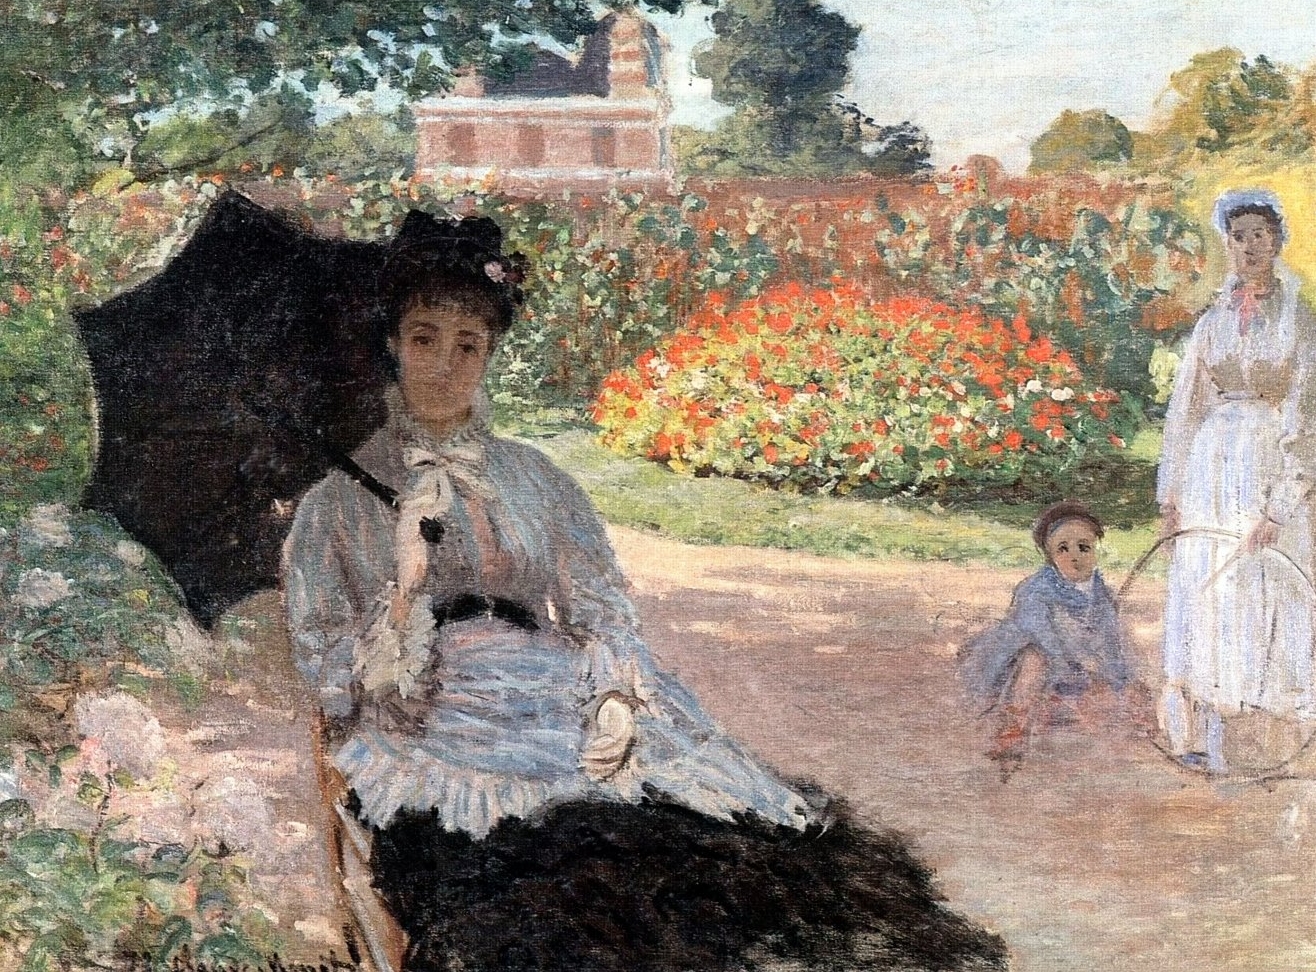 Claude+Monet-1840-1926 (159).jpg